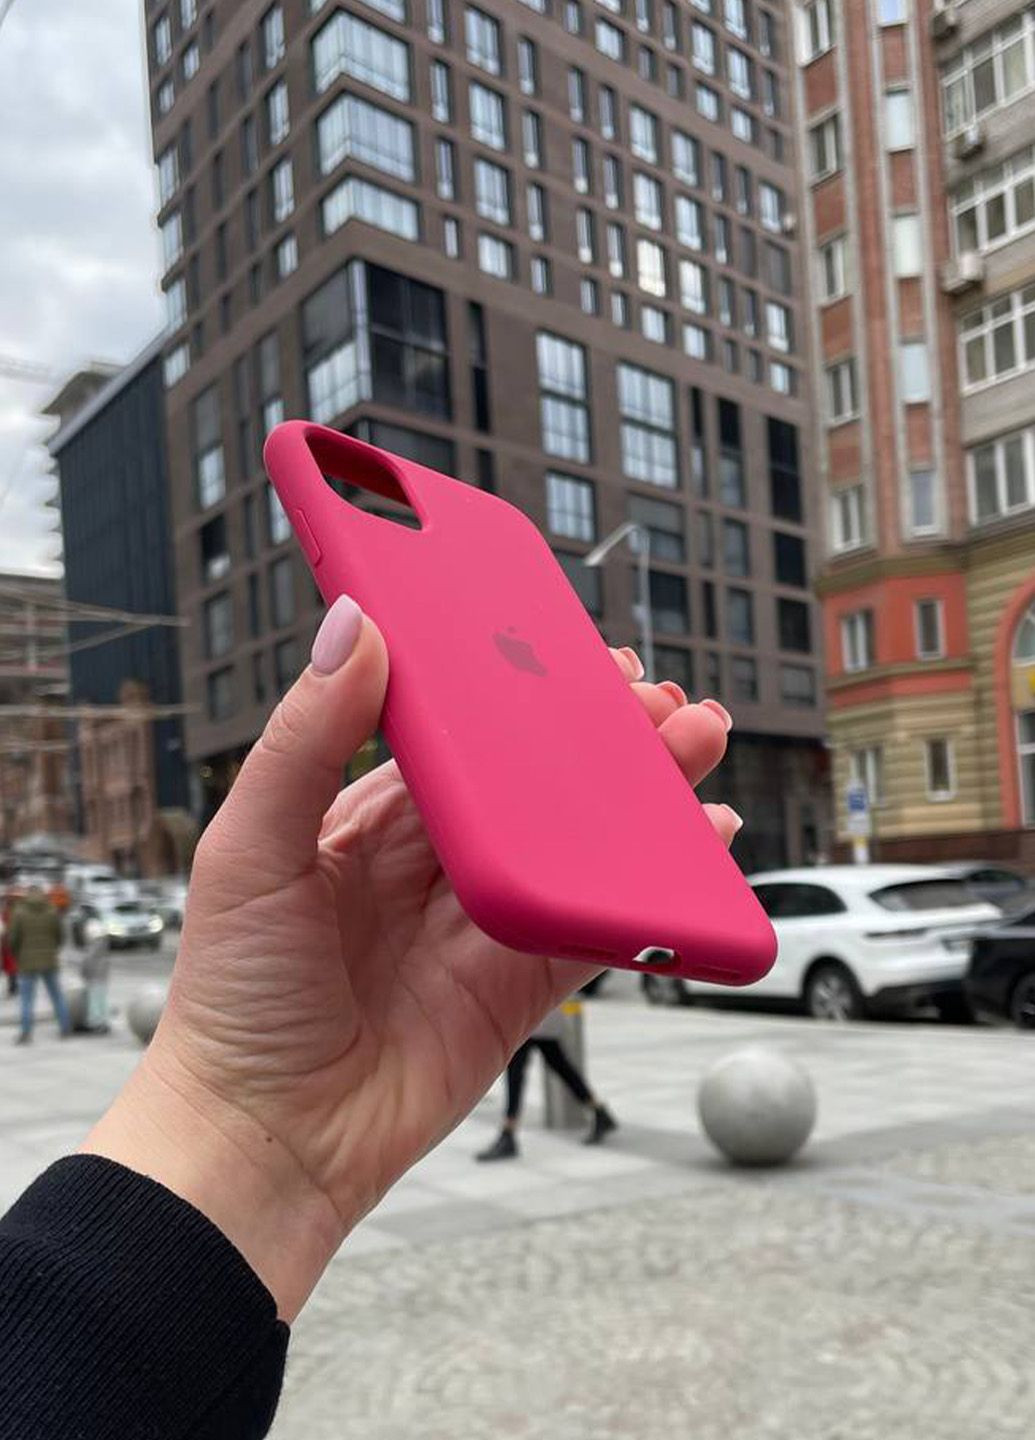 Чехол для iPhone 11 Pro Max розовый Rose Red Silicone Case силикон кейс No Brand (289754136)